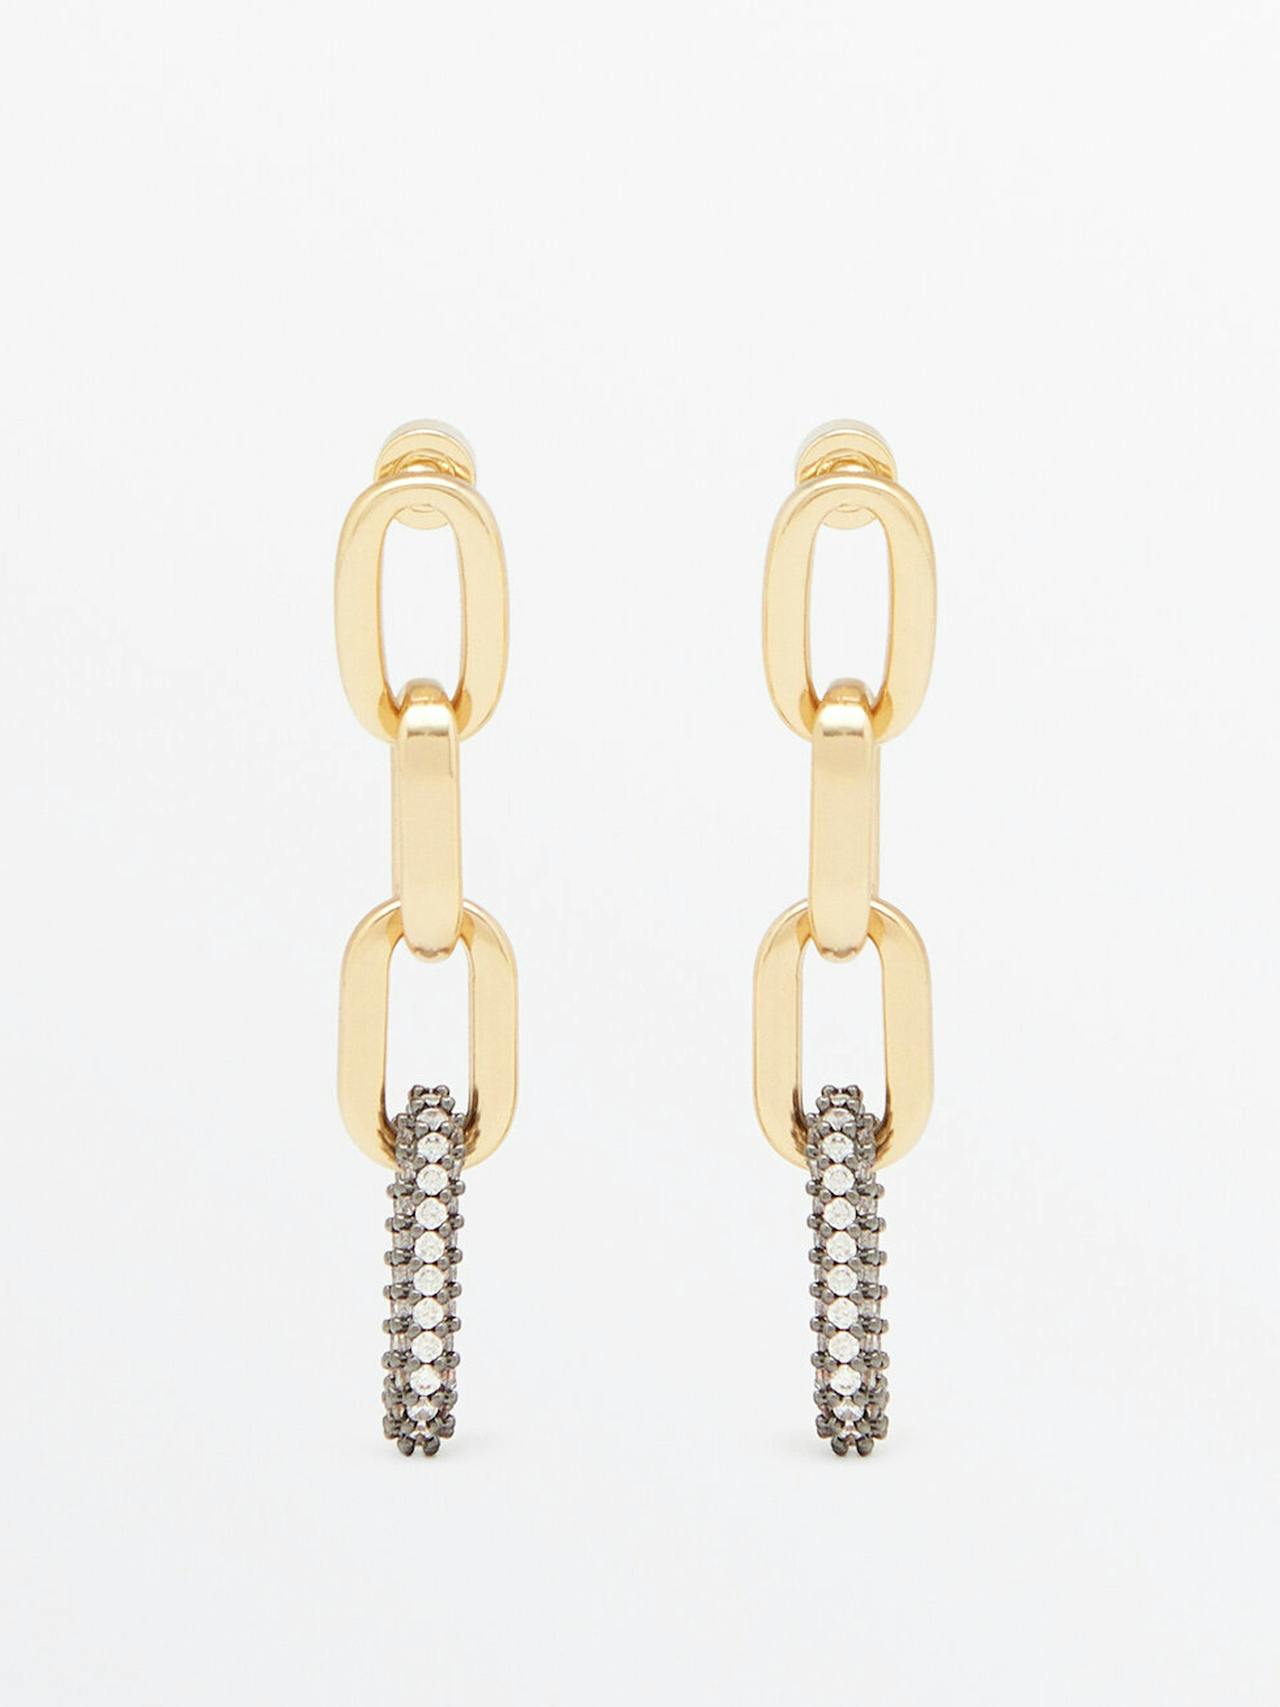 Shiny chain link earrings